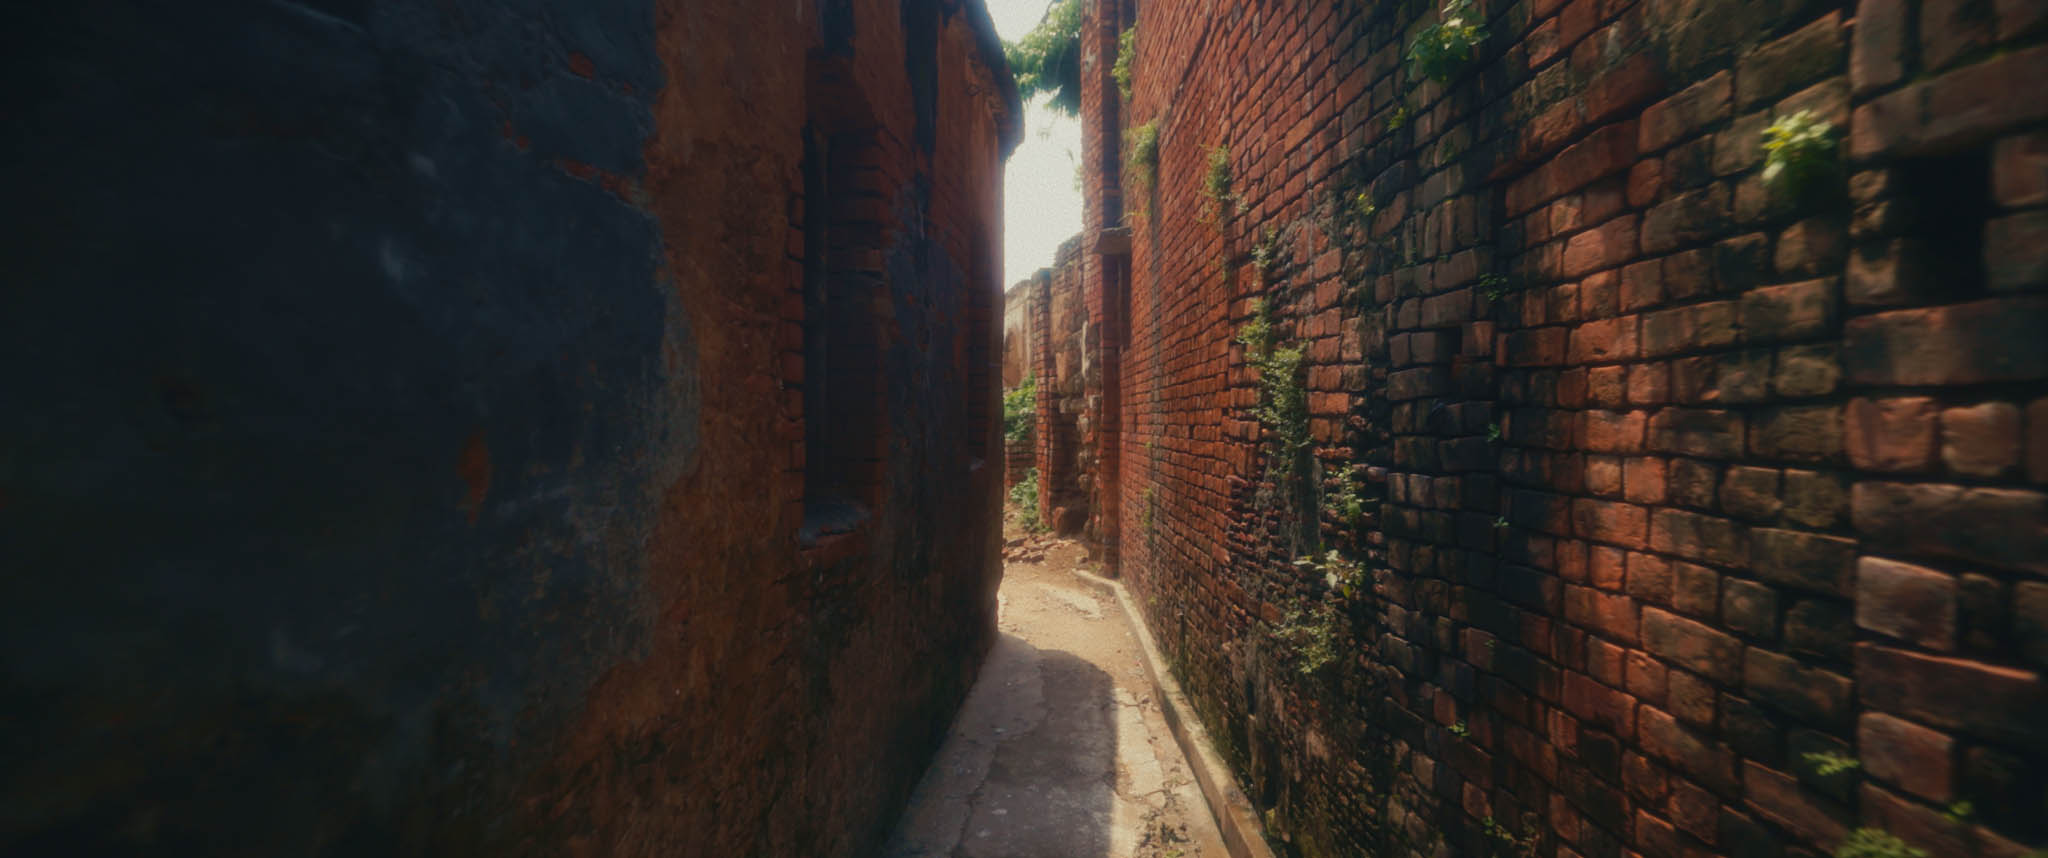 Narrow brick walkway